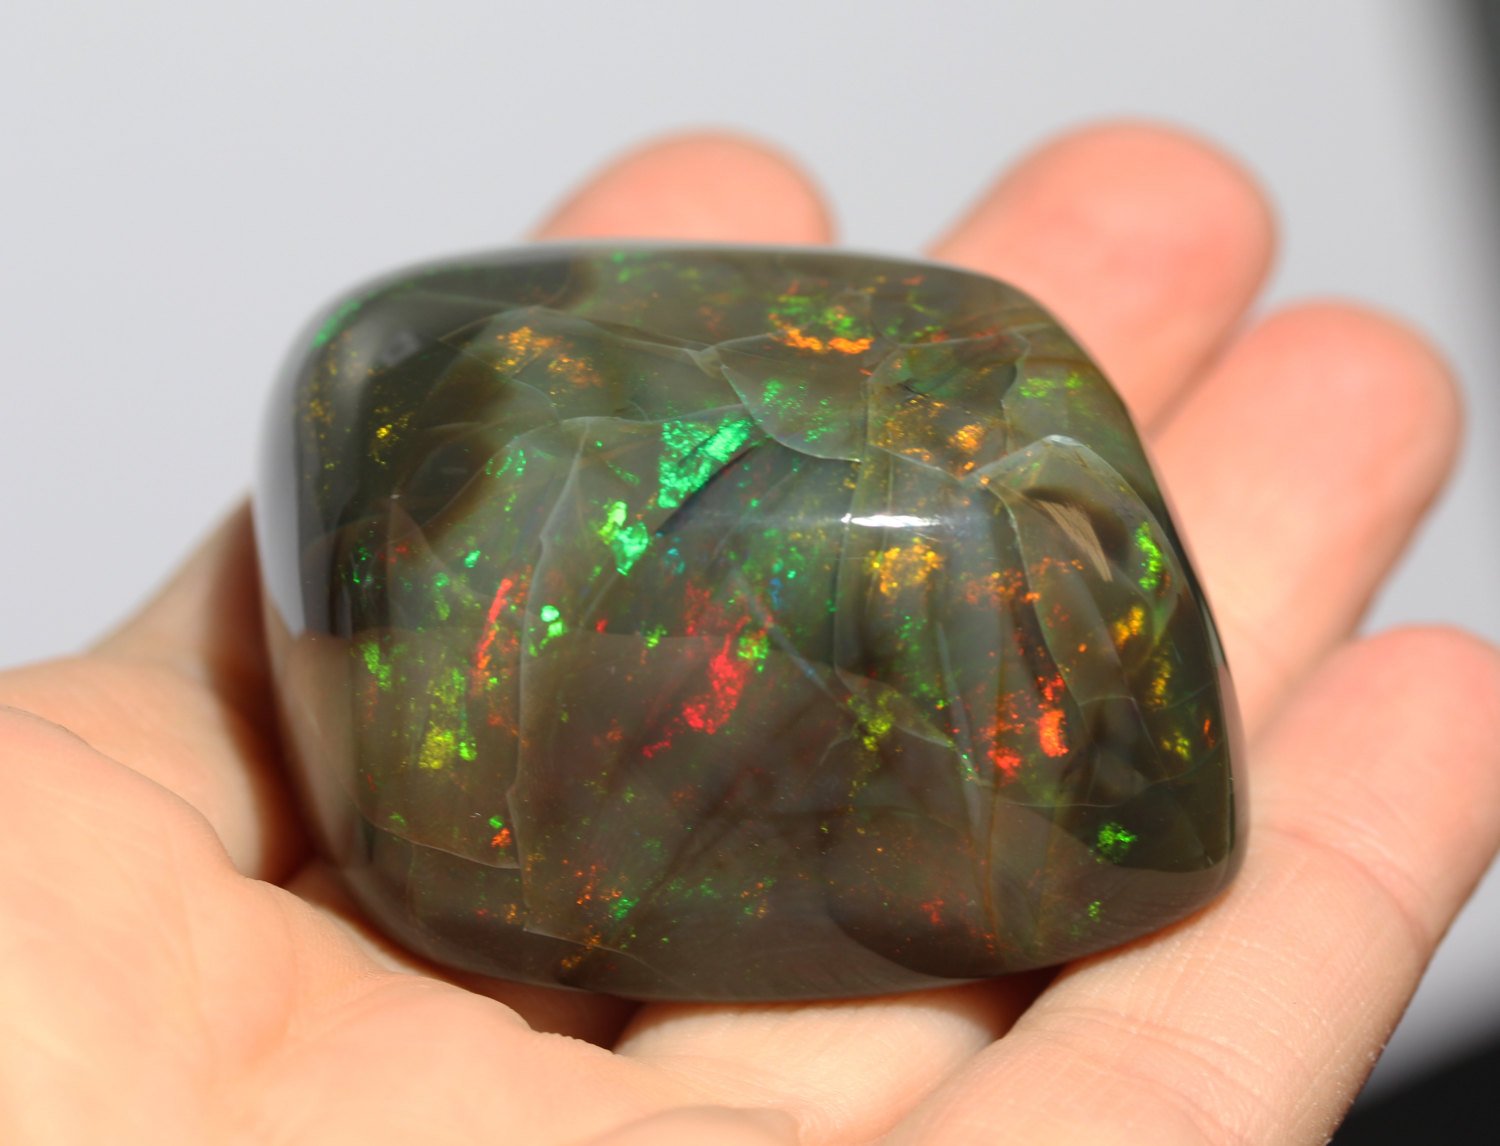 Natural Black Opal Gemstone